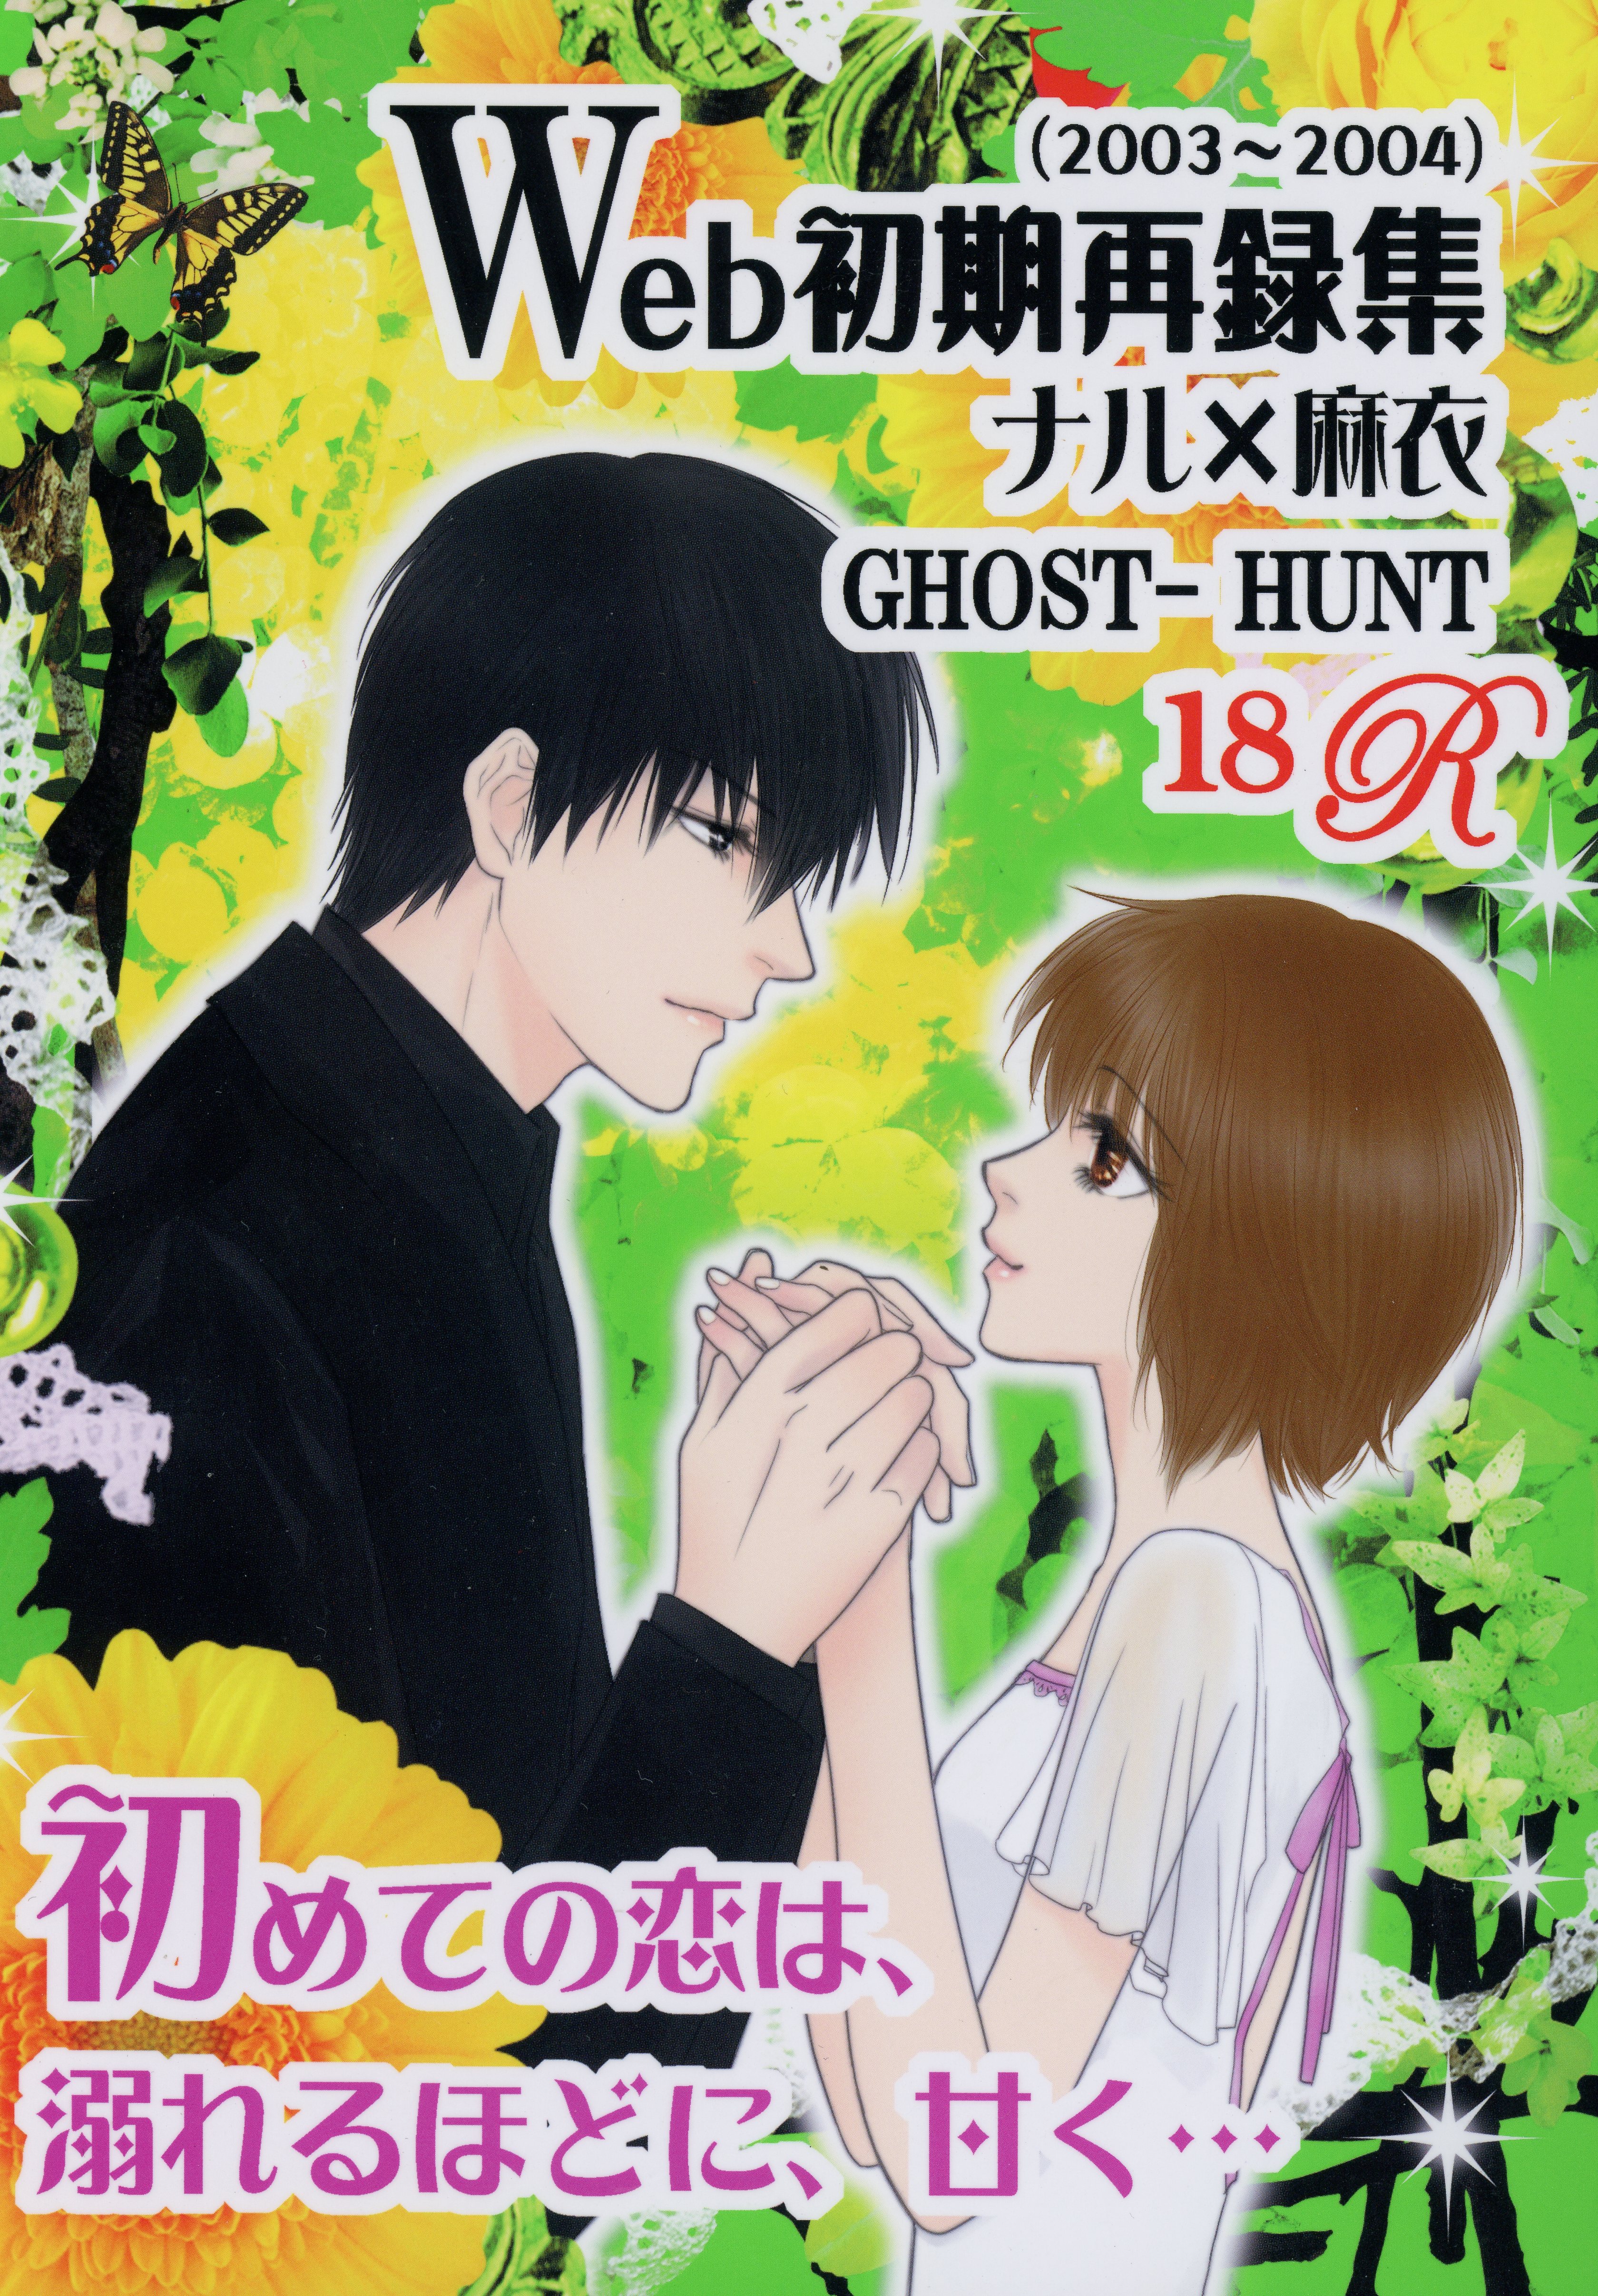 [Boys Love (Yaoi) : R18] Doujinshi - Omnibus - Ghost Hunt (Web初期再録集 初めての恋は、溺れるほどに、甘く・・・ *再録) / ROSE MOON PUBLICATION